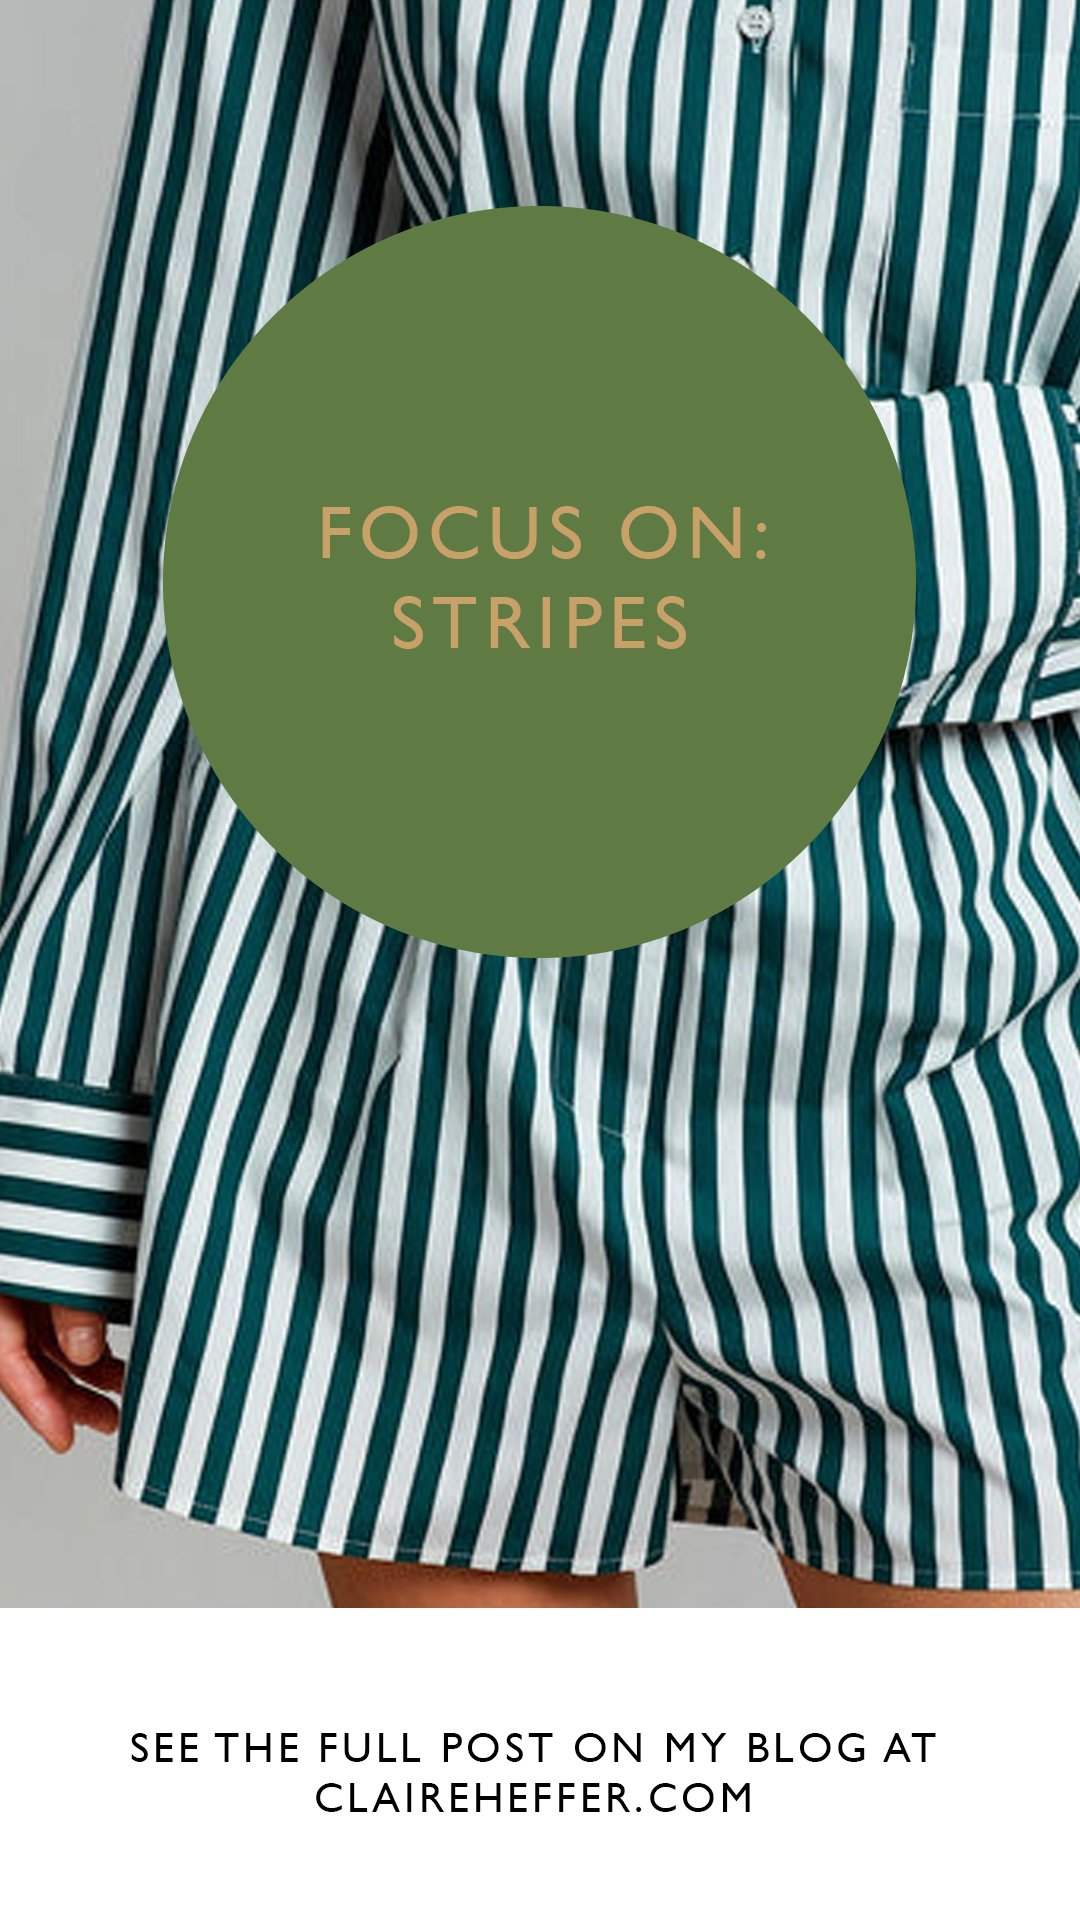  stripes, focus on, focus on stripes, striped fashion, striped, striped shorts, stripes interiors, interior design, stripe sunbeds, striped towels, striped dress, striped table cloth, stripes for the home, illustration, art, striped illustration, str